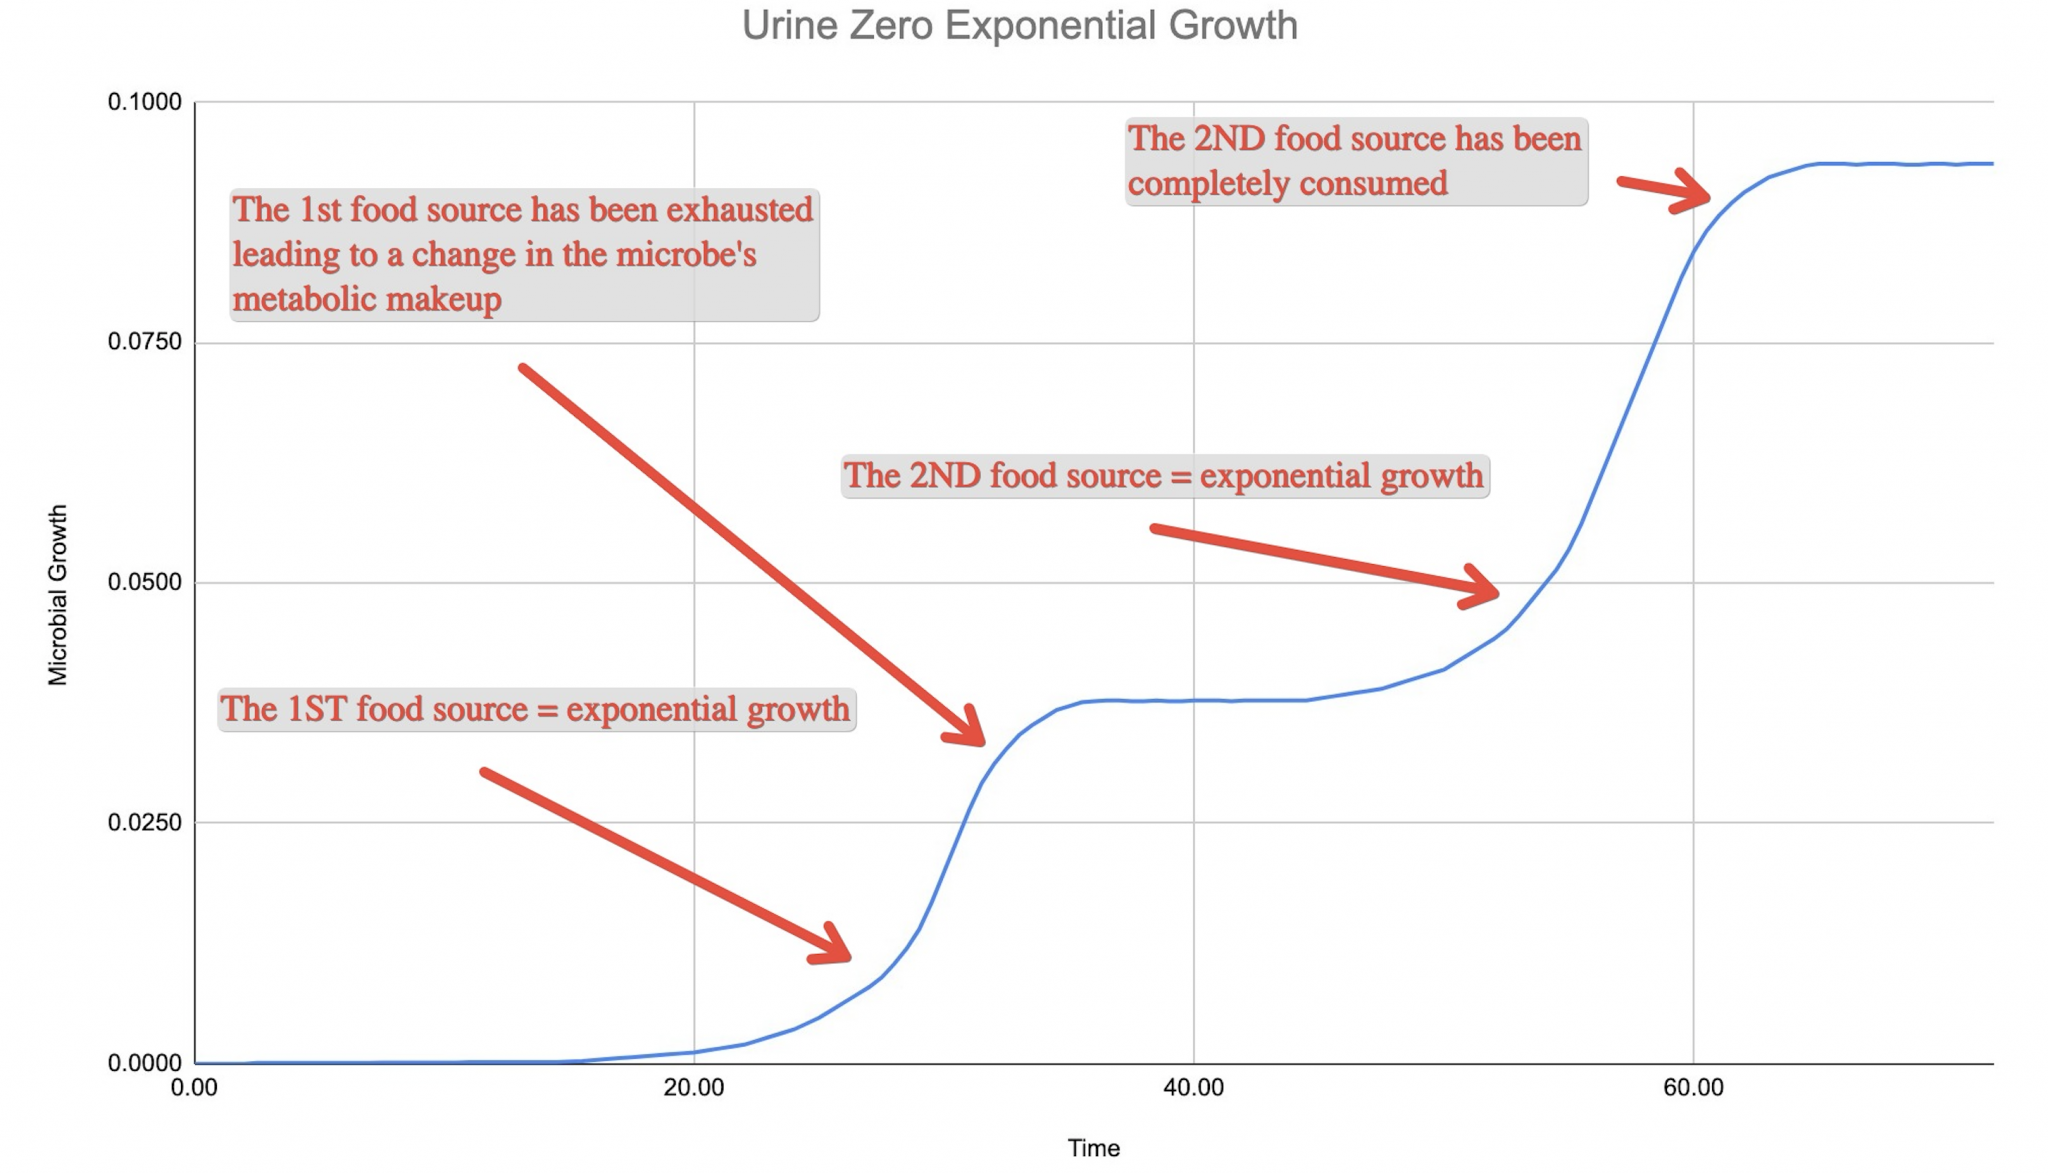 Urine Zero Exponential Growth